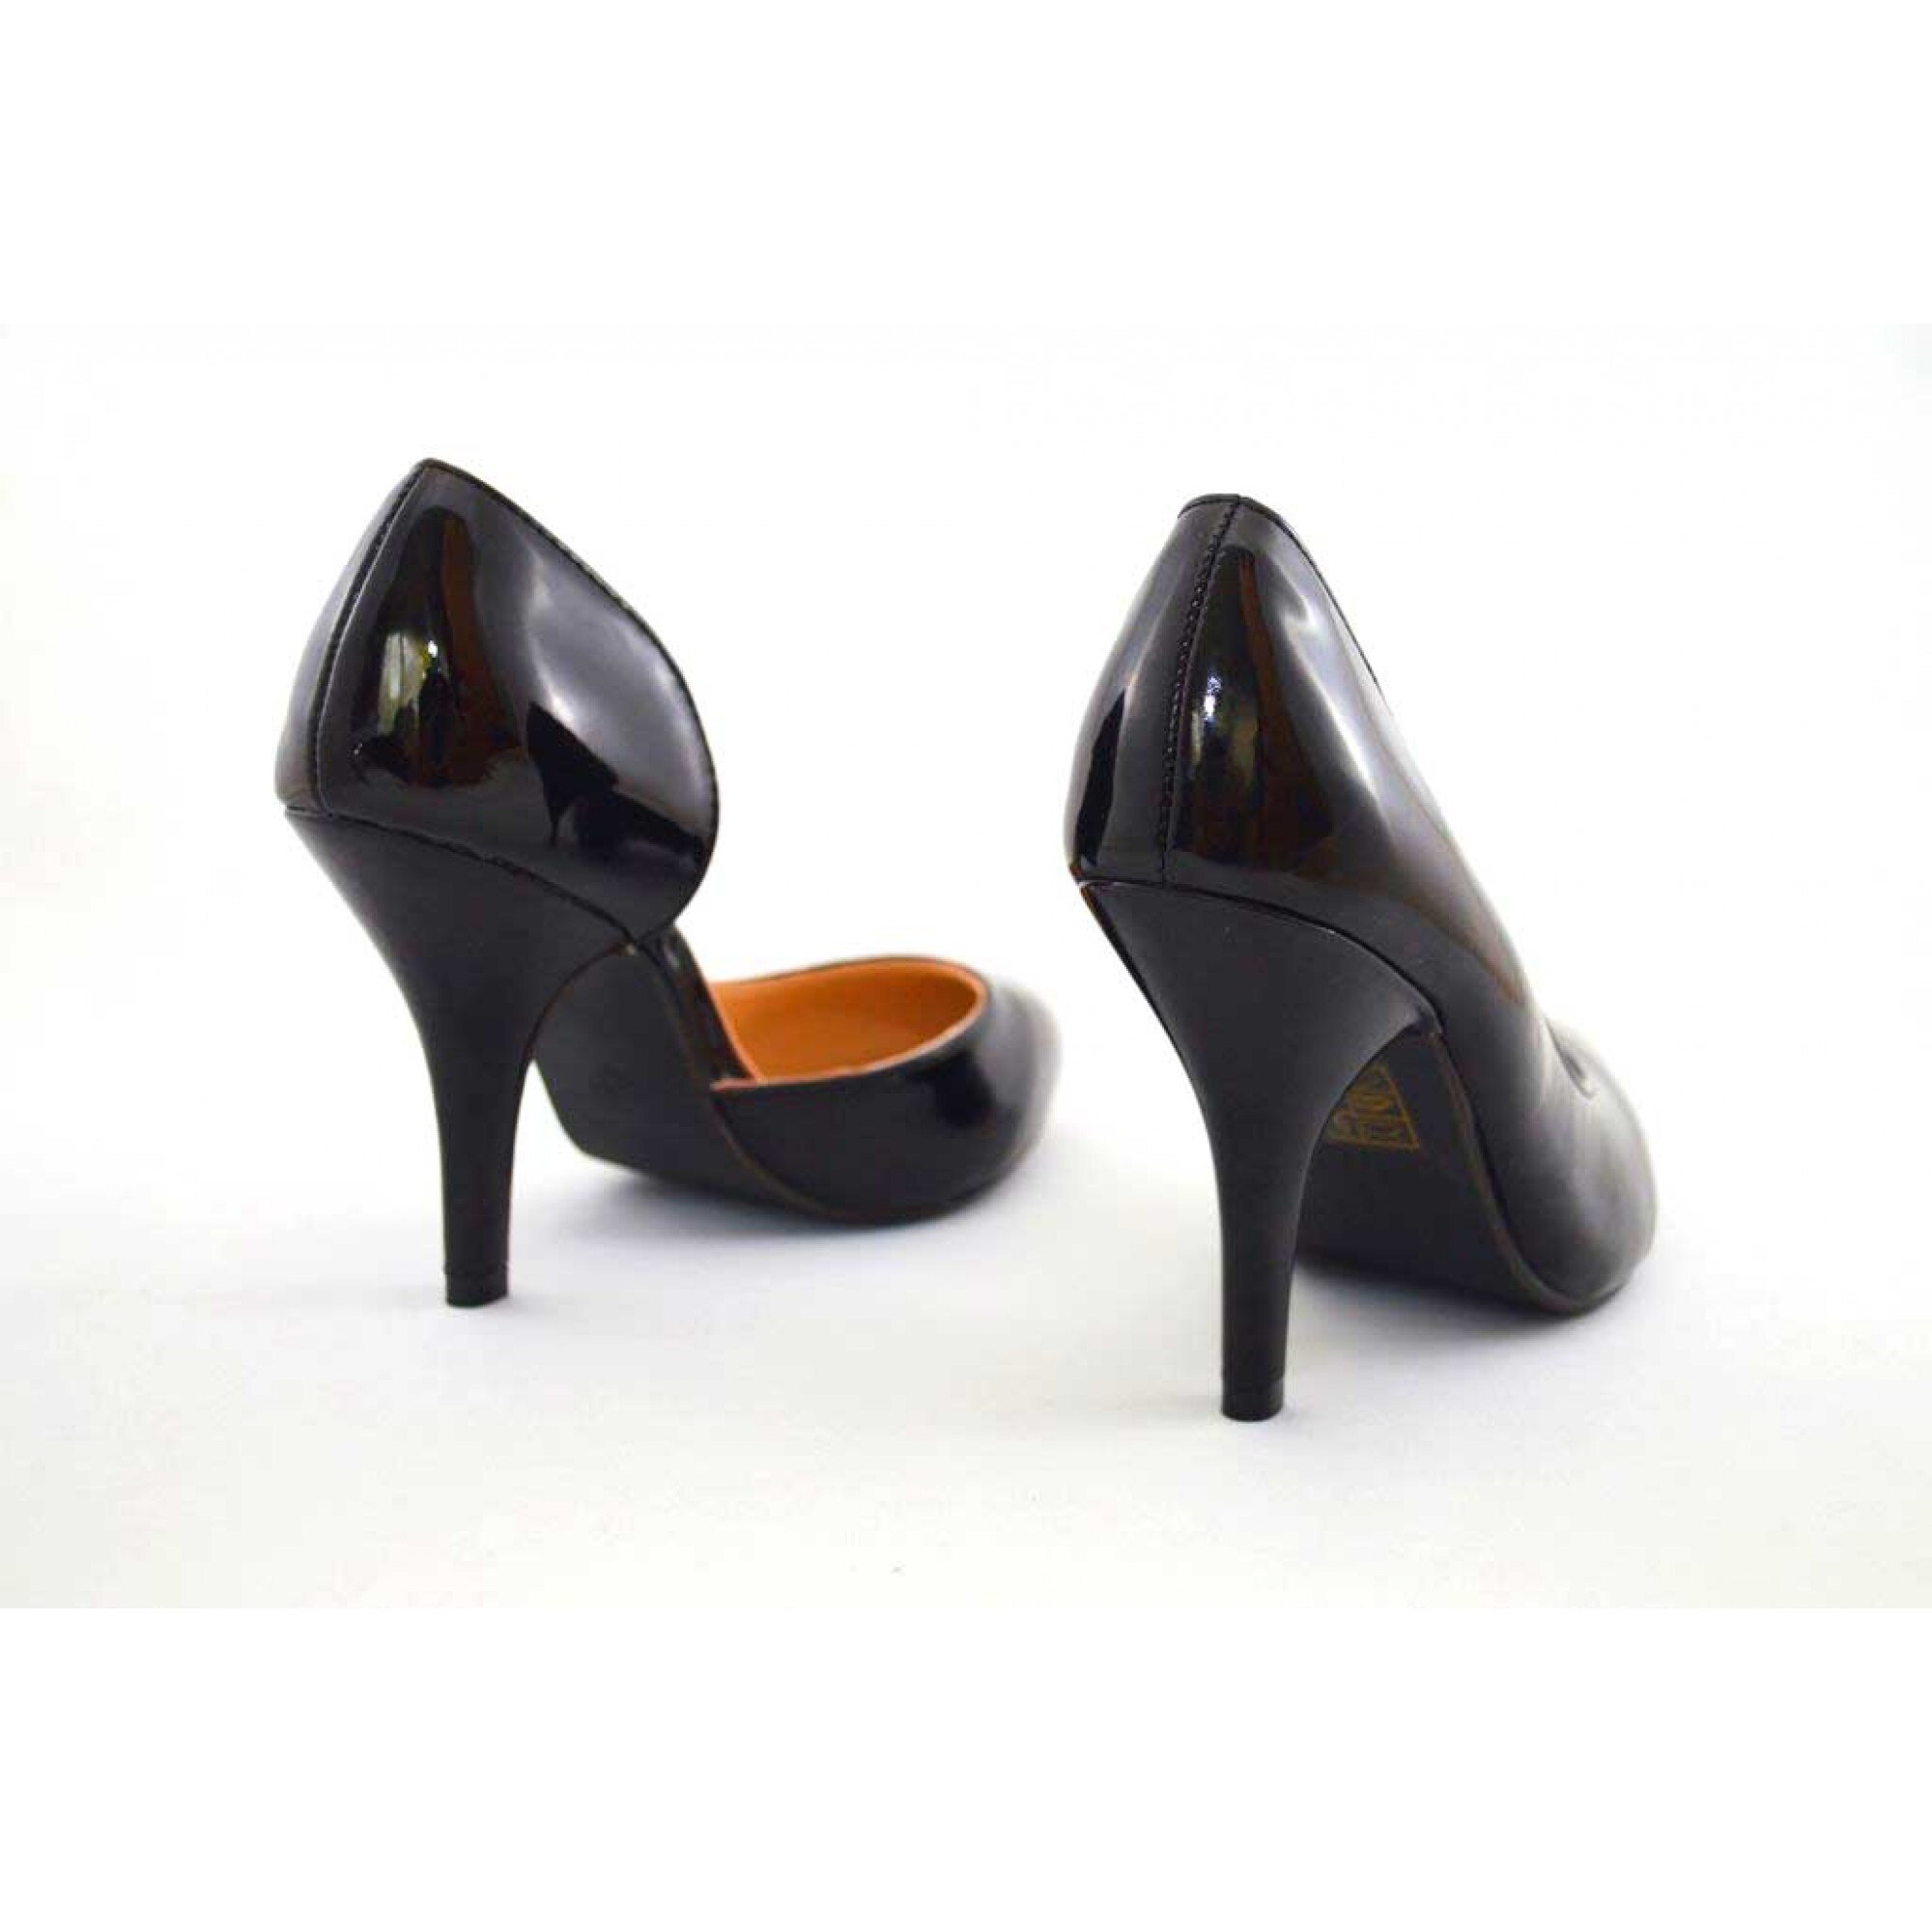 rhyme Confirmation to see Pantofi dama negri Stiletto - toc 9 cm model Lucia 2, 36 EU - eMAG.ro